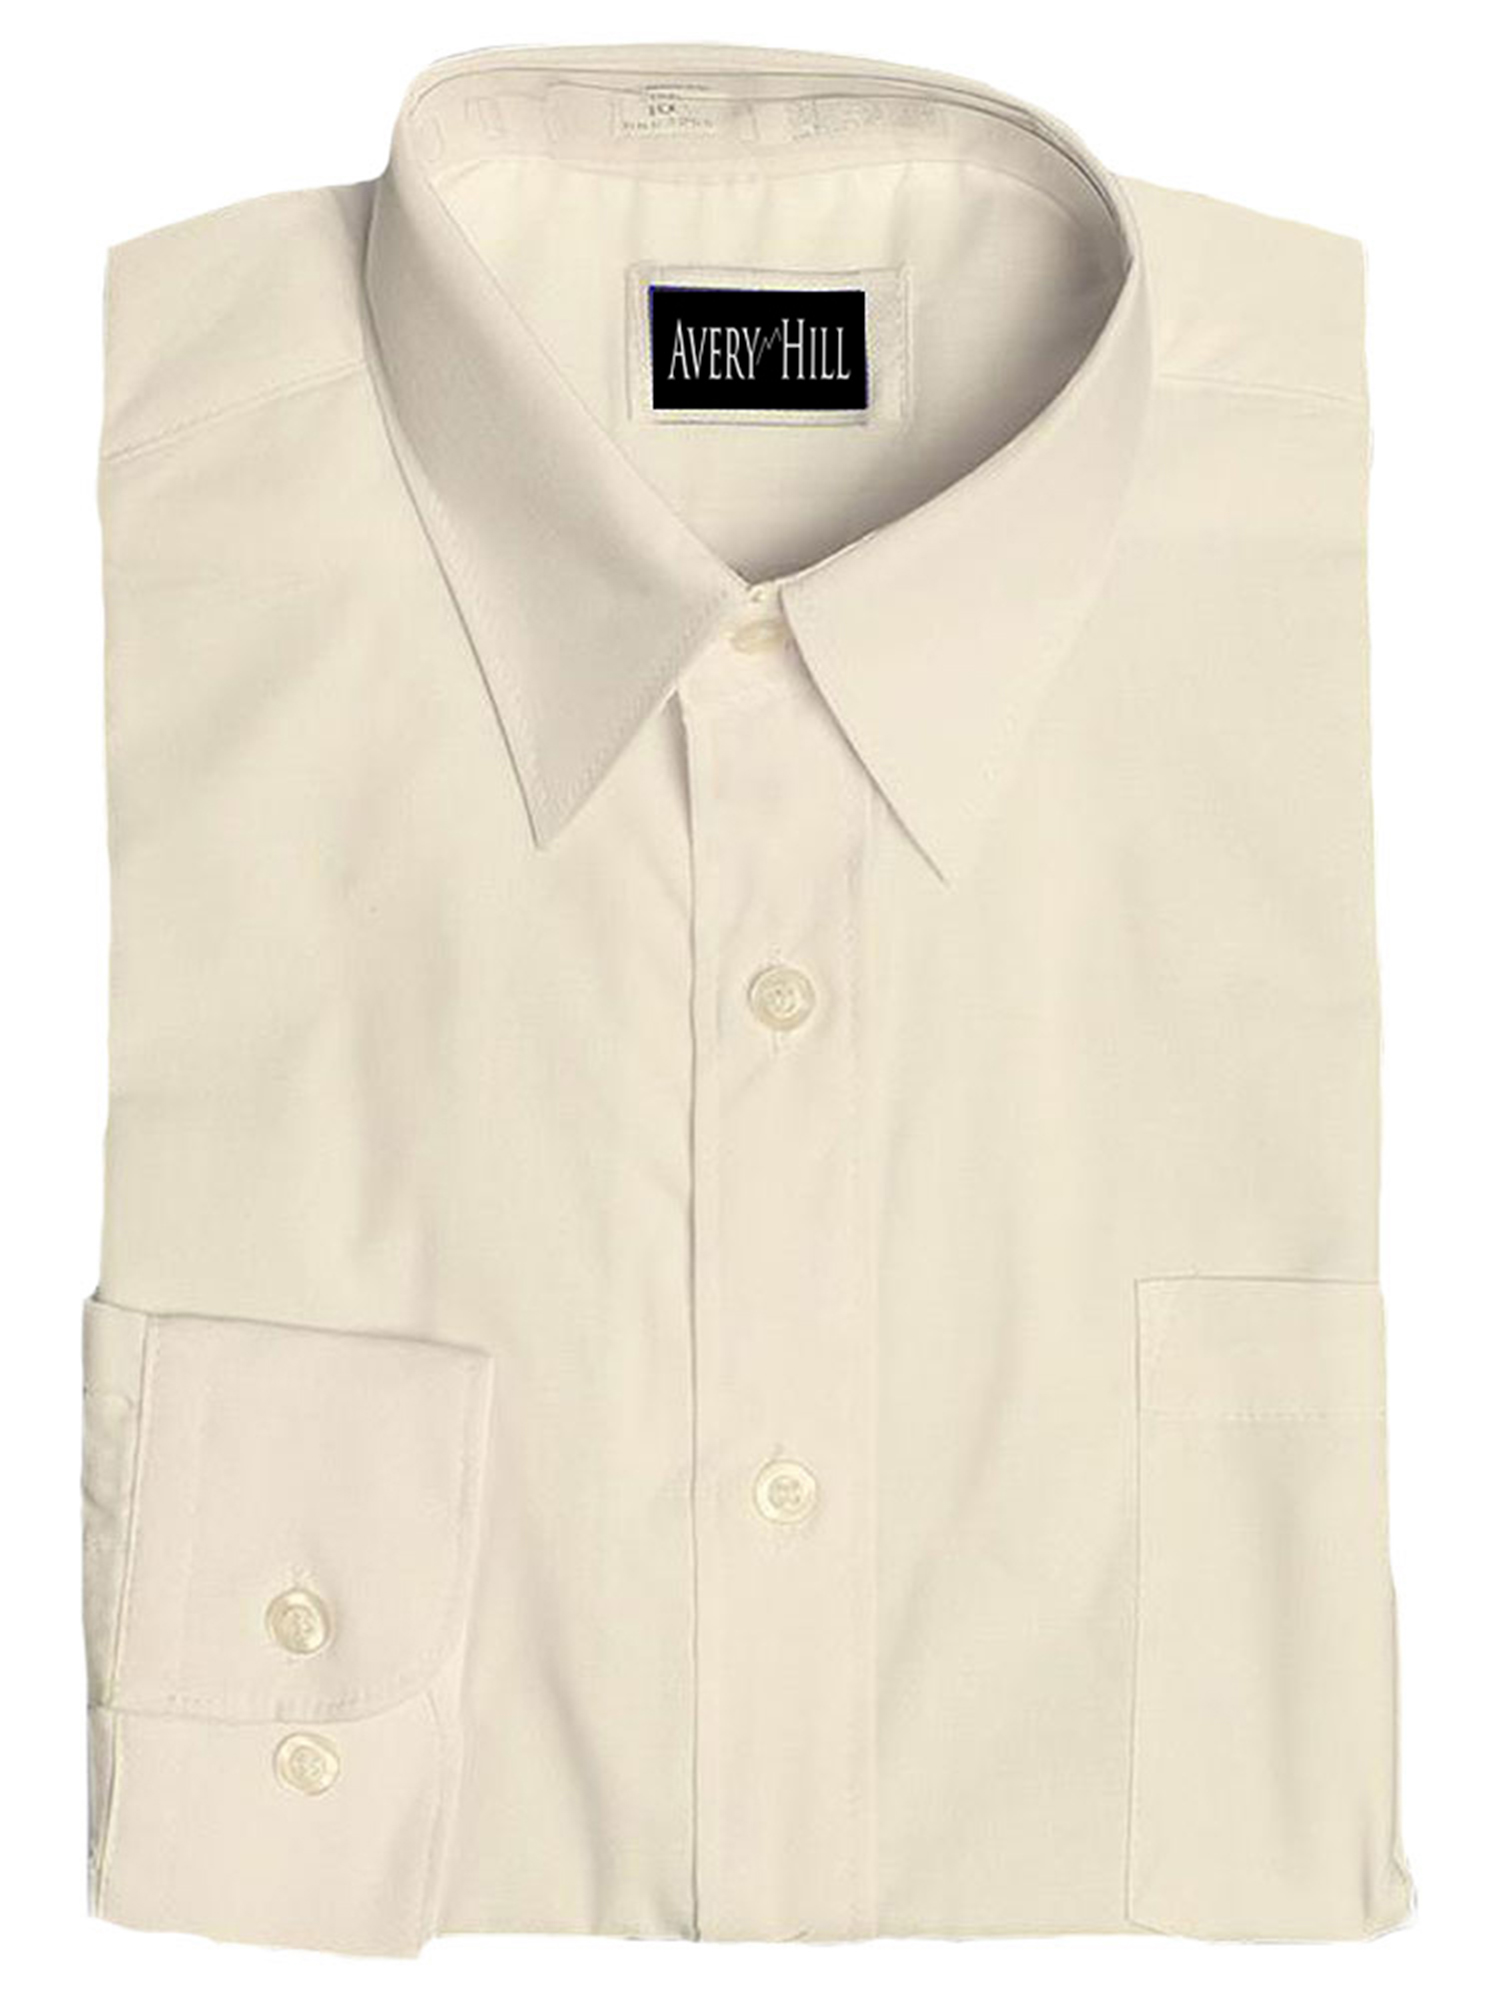 Boys White or Ivory Long Sleeve Wrinkle Resistant Dress Shirt IV 3T